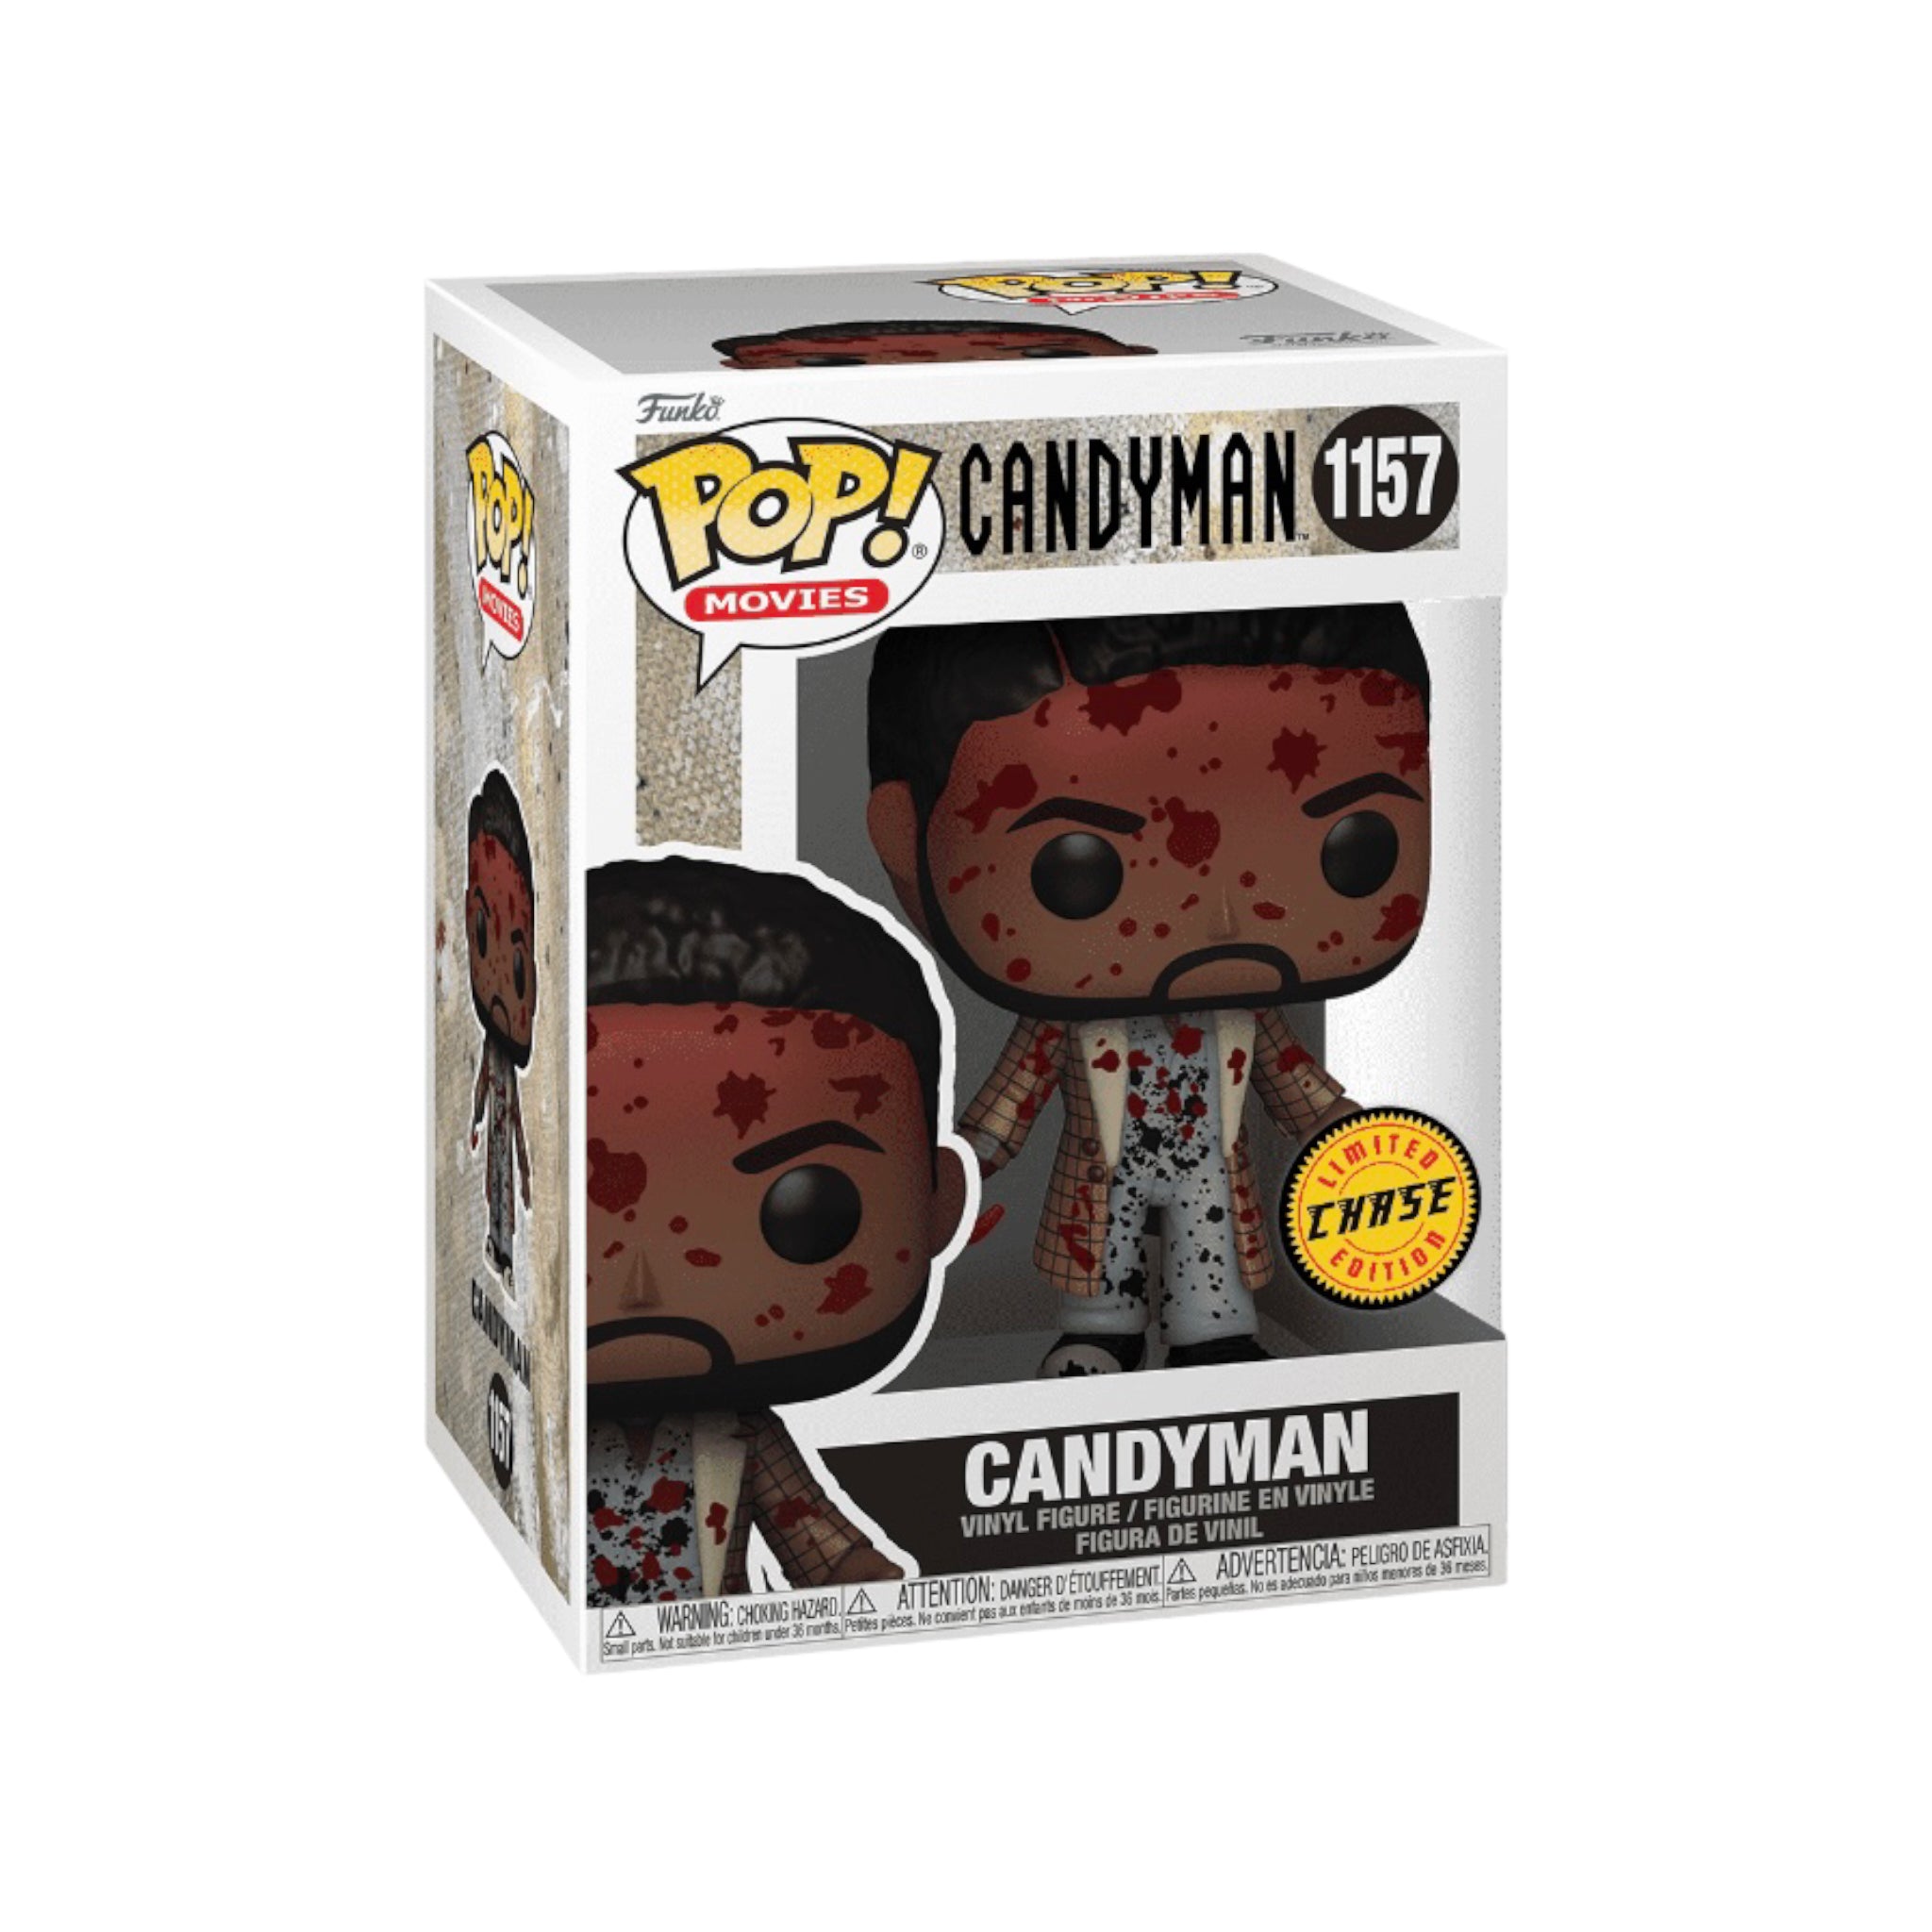 Candyman #1157 (Bloody Chase) Funko Pop! - Candyman